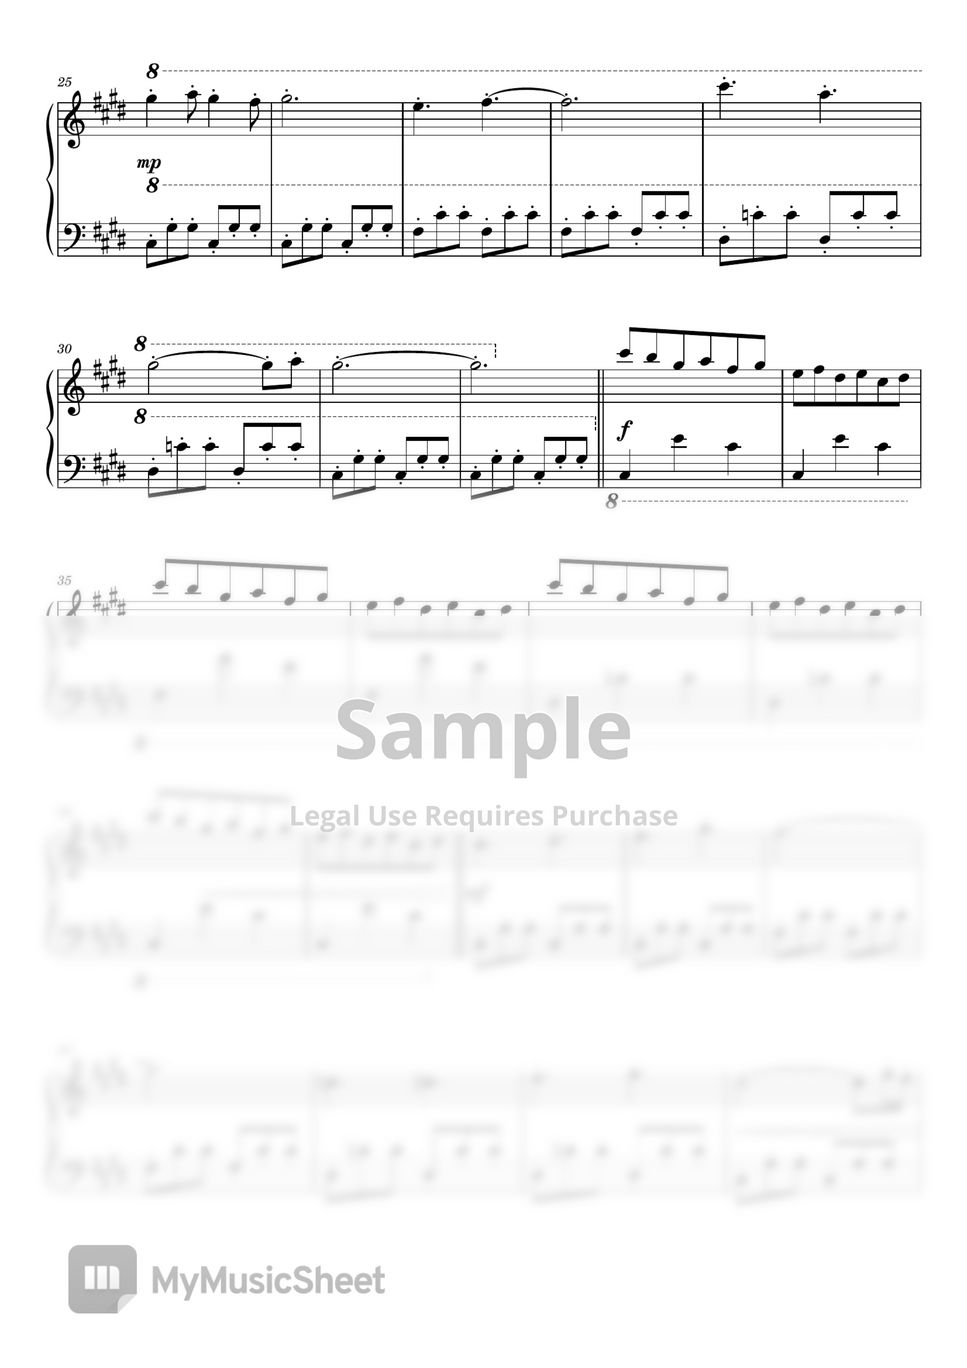 The vampire masquerade Sheet music for Piano, Violin, Guitar